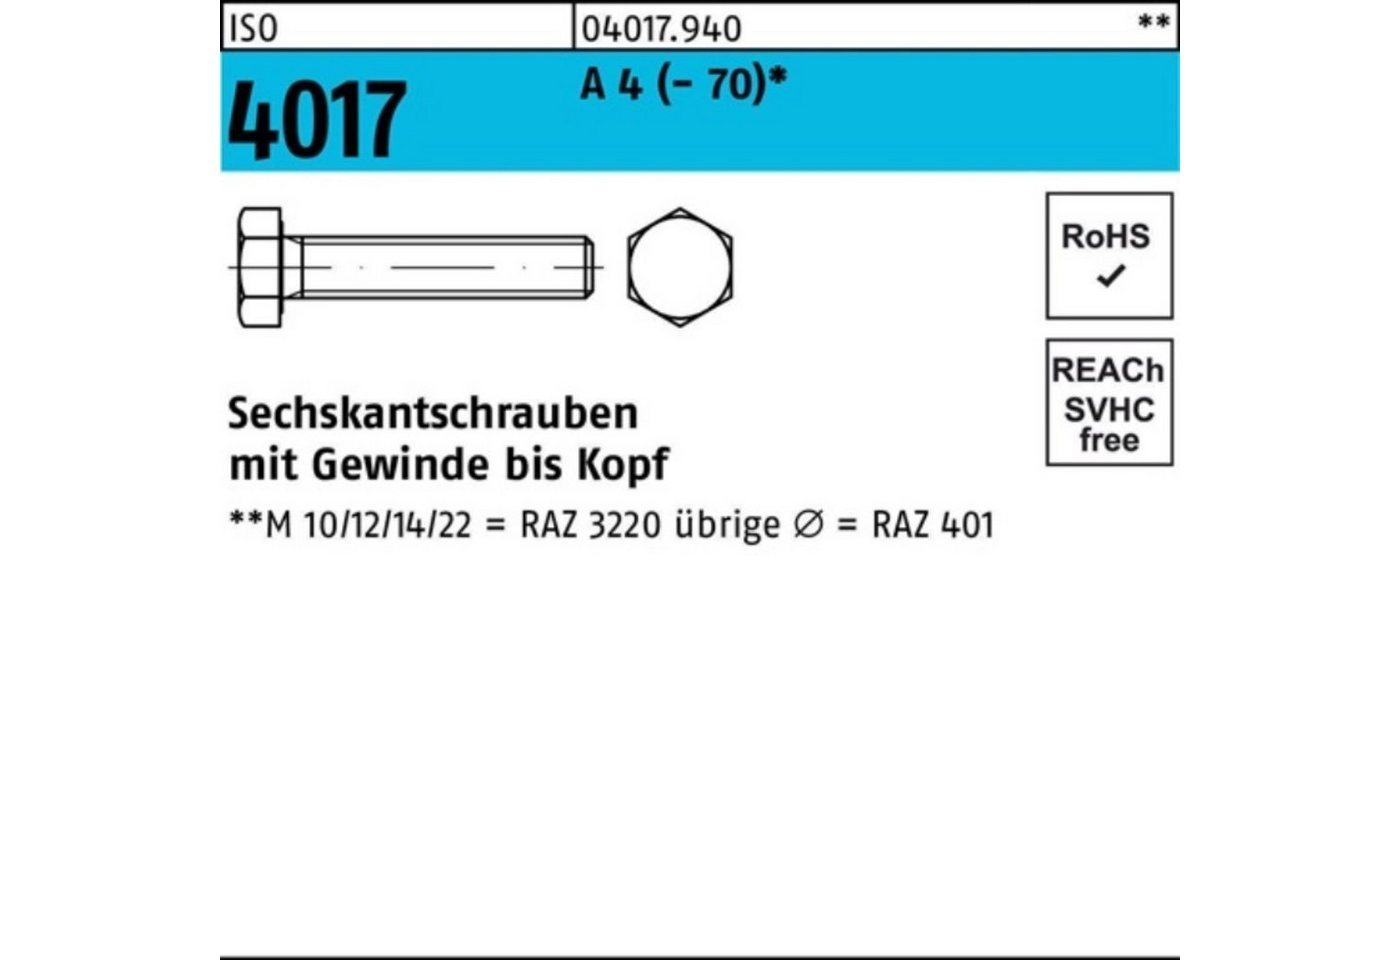 Bufab Sechskantschraube 100er Pack Sechskantschraube ISO 4017 VG M24x 80 A 4 (70) 1 Stück I von Bufab